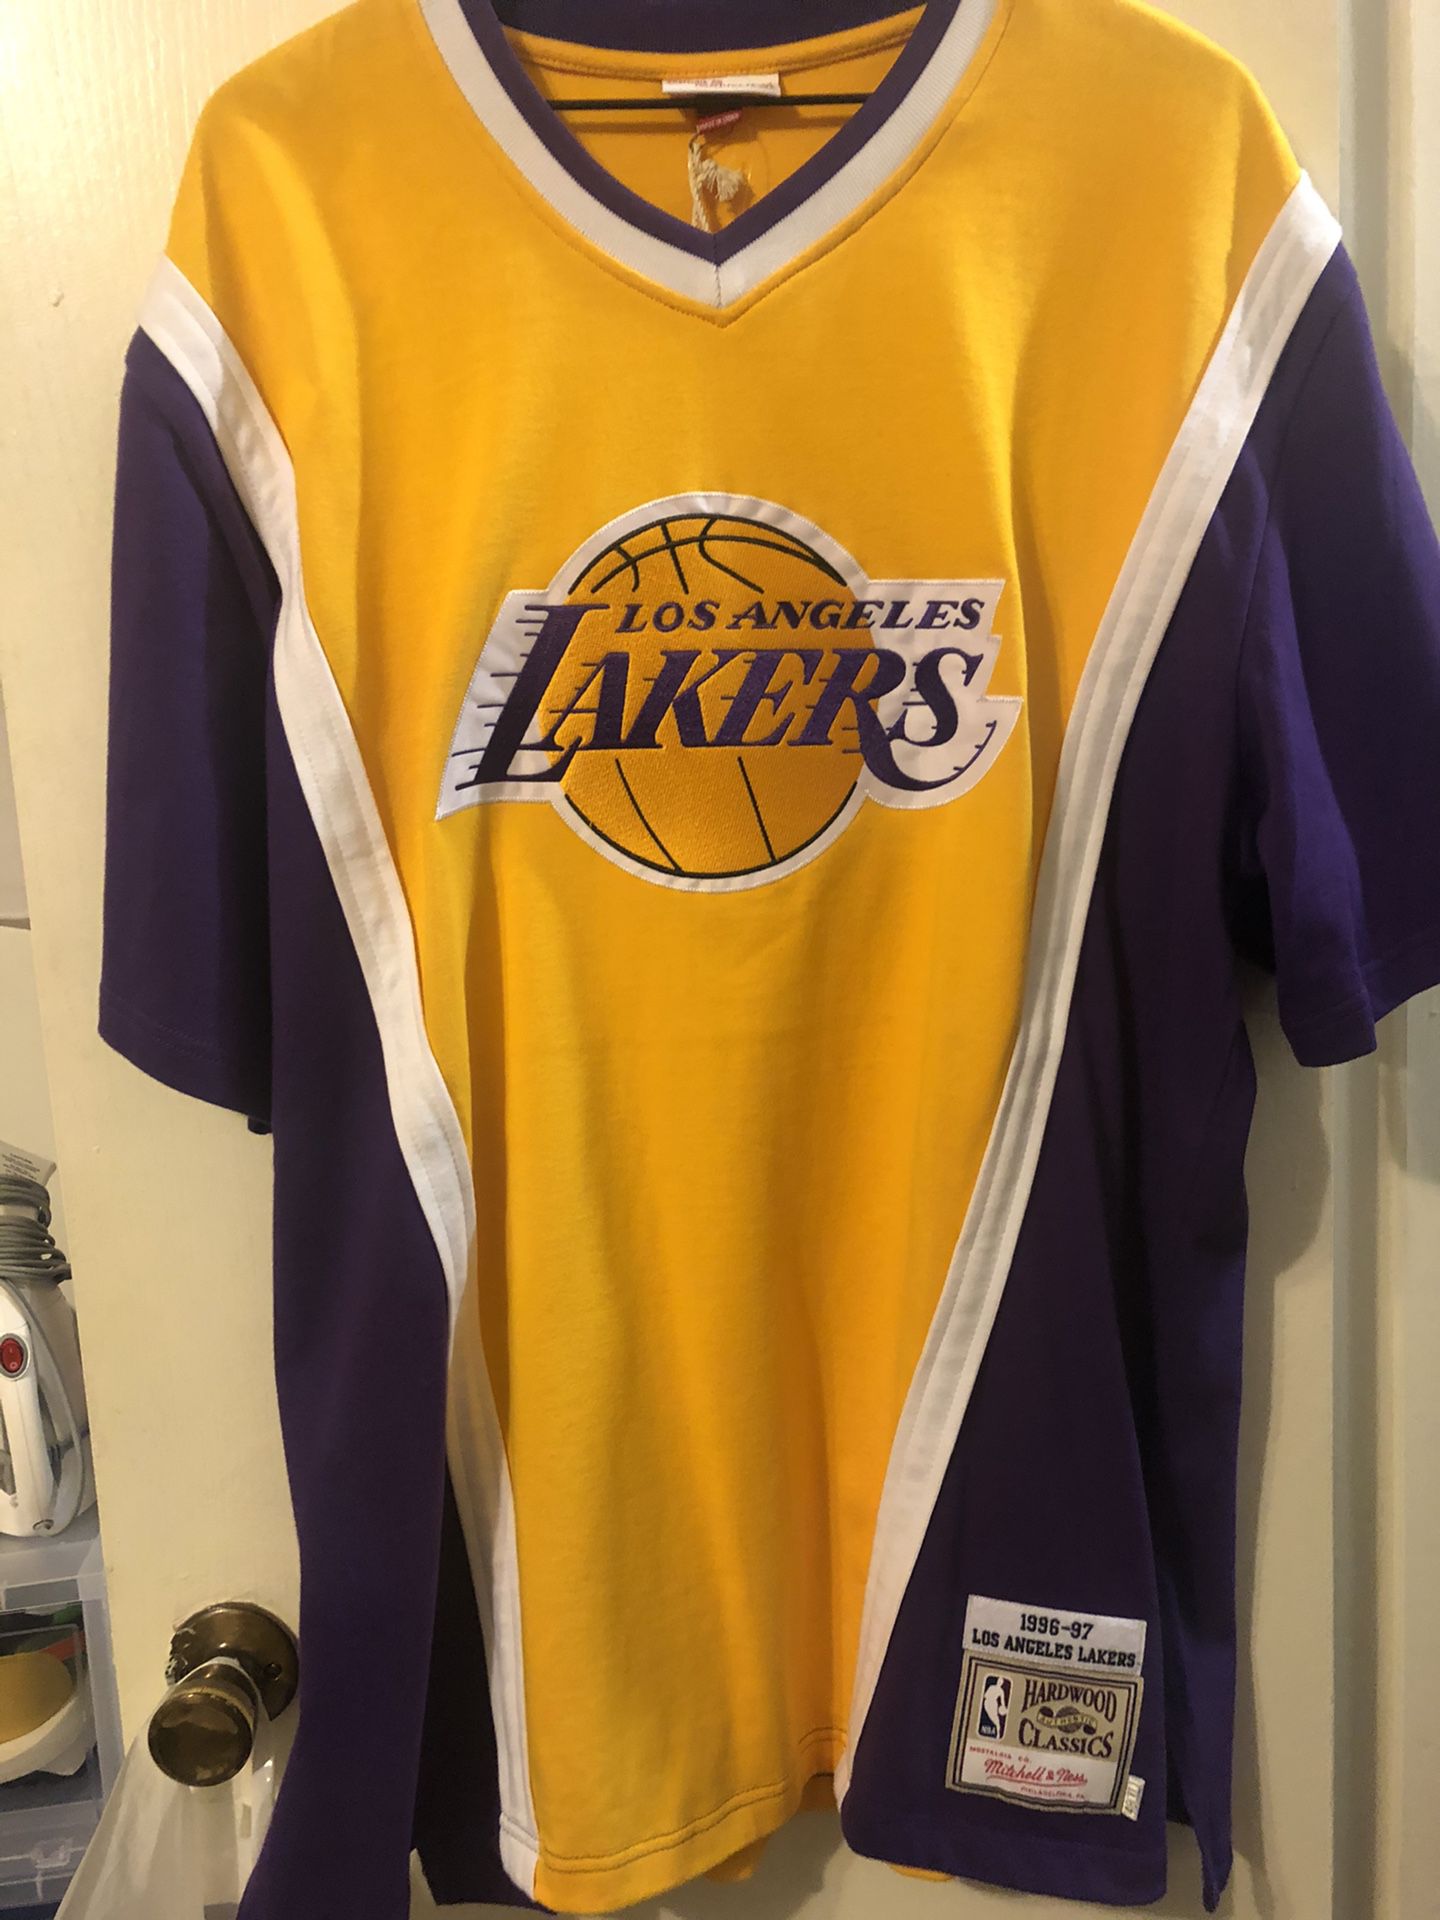 2018 A Bathing Ape Mitchell Ness Lakers Warm Up Jacket Size XXL